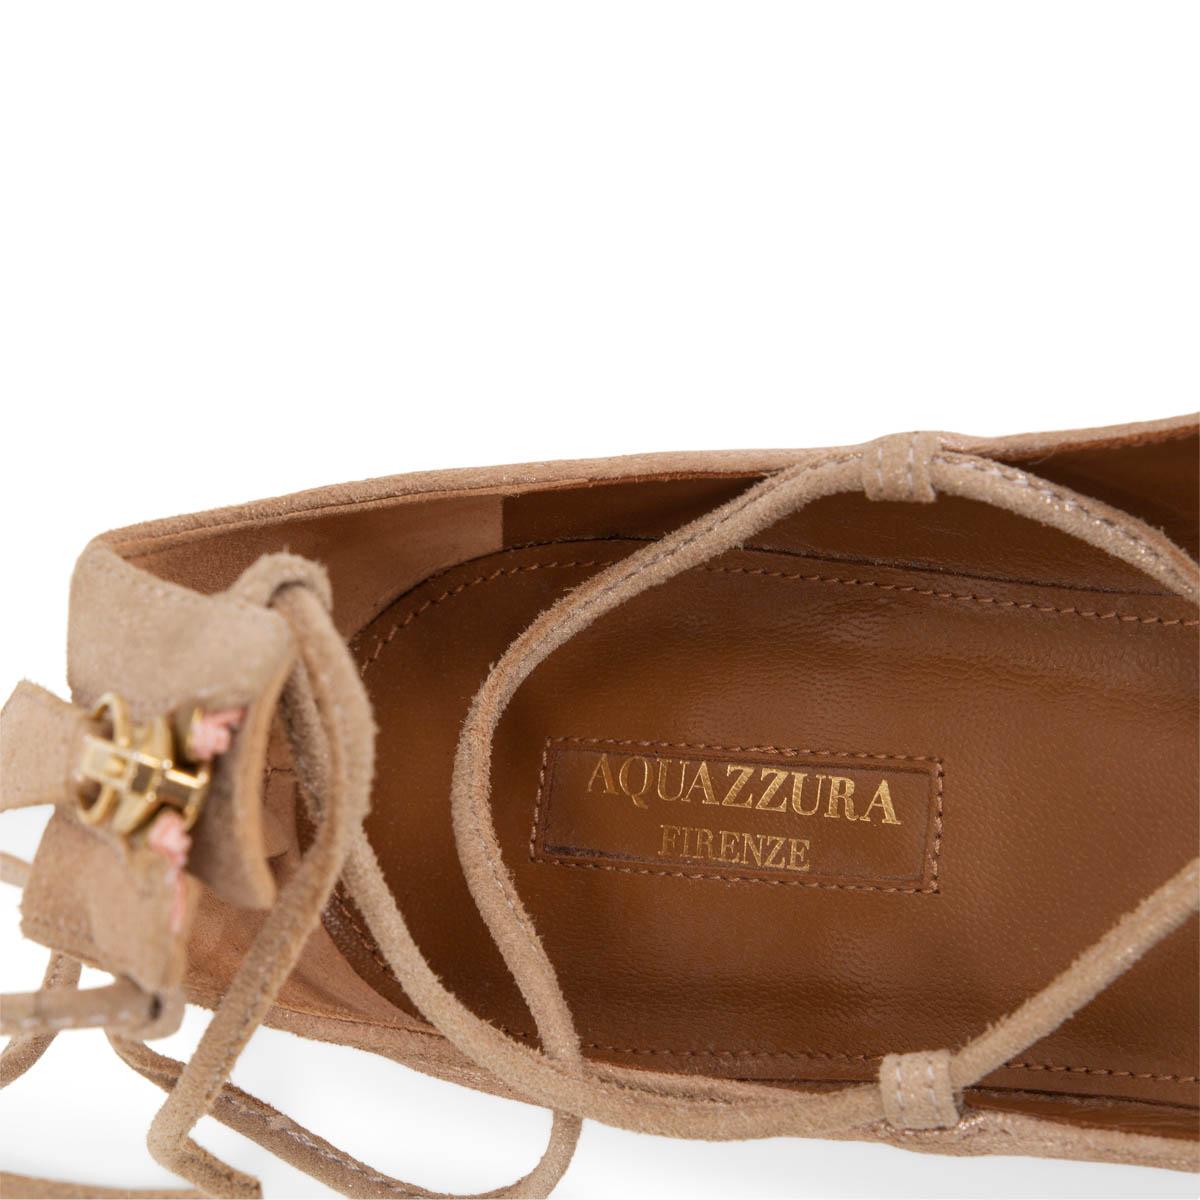 Beige AQUAZZURA metallic nude leather SUNSHINE Ballet Flats Shoes 40 For Sale